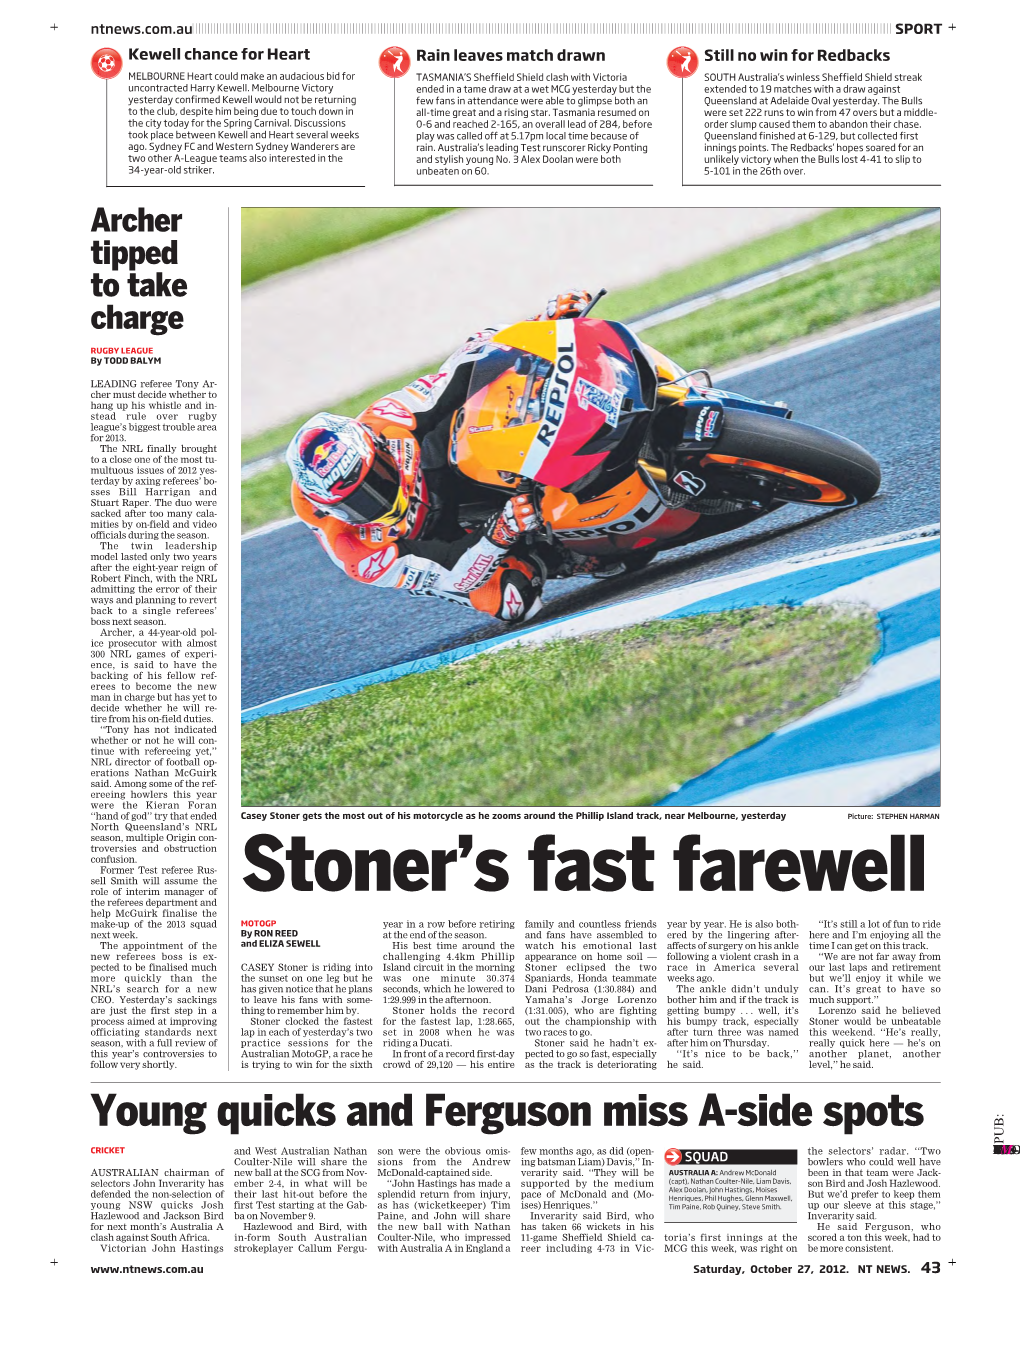 Stoner's Fast Farewell